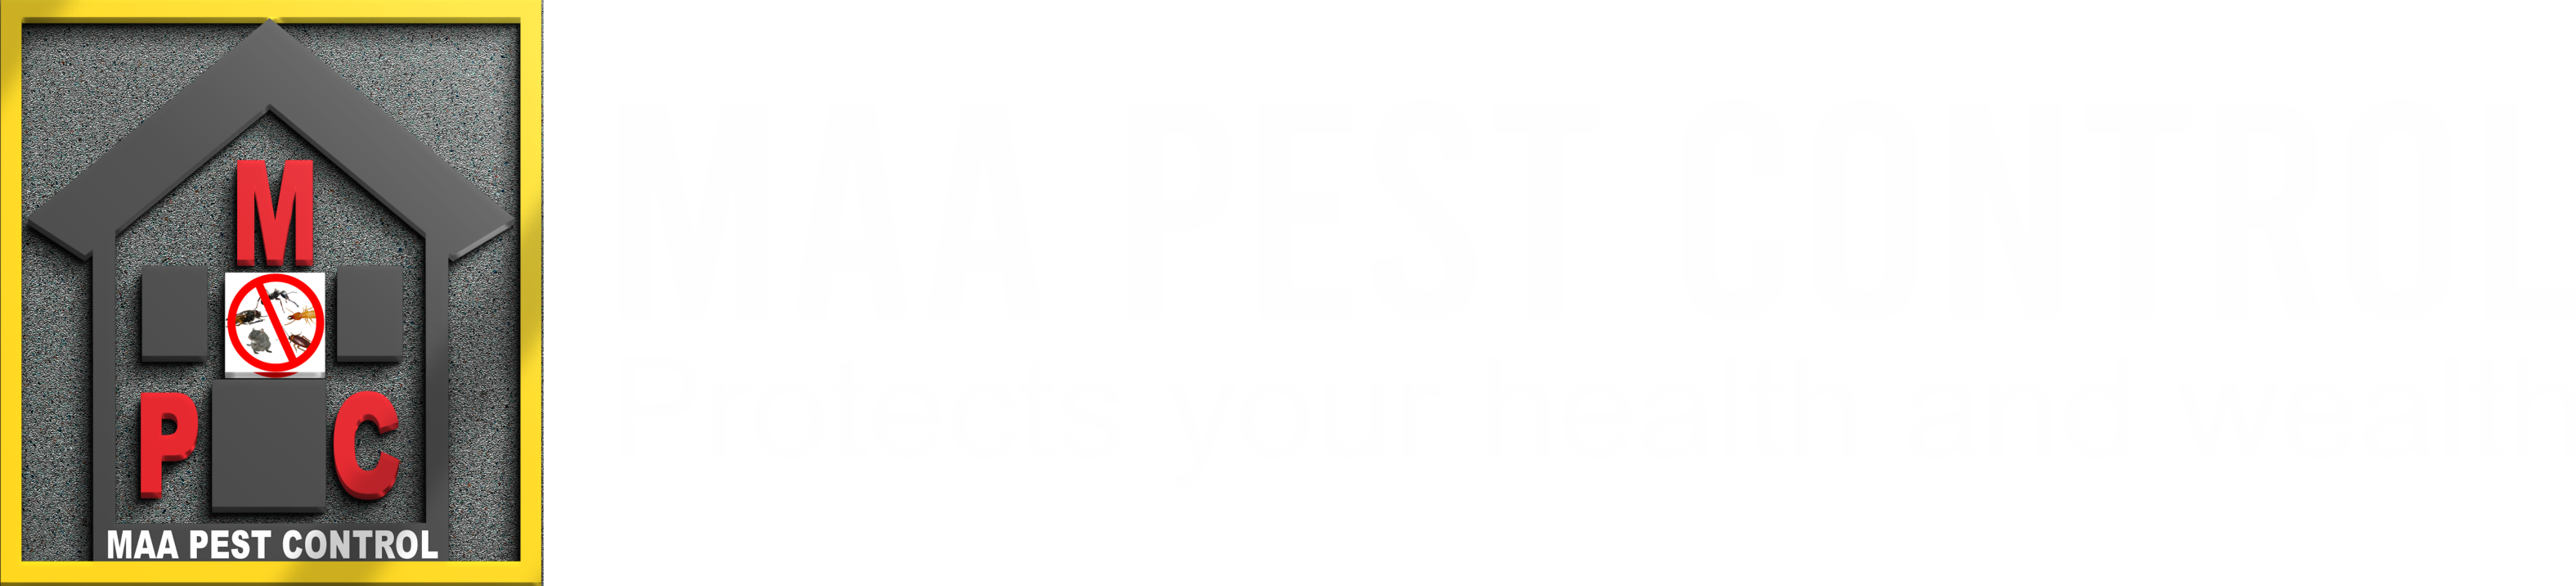 MAA Pest Control